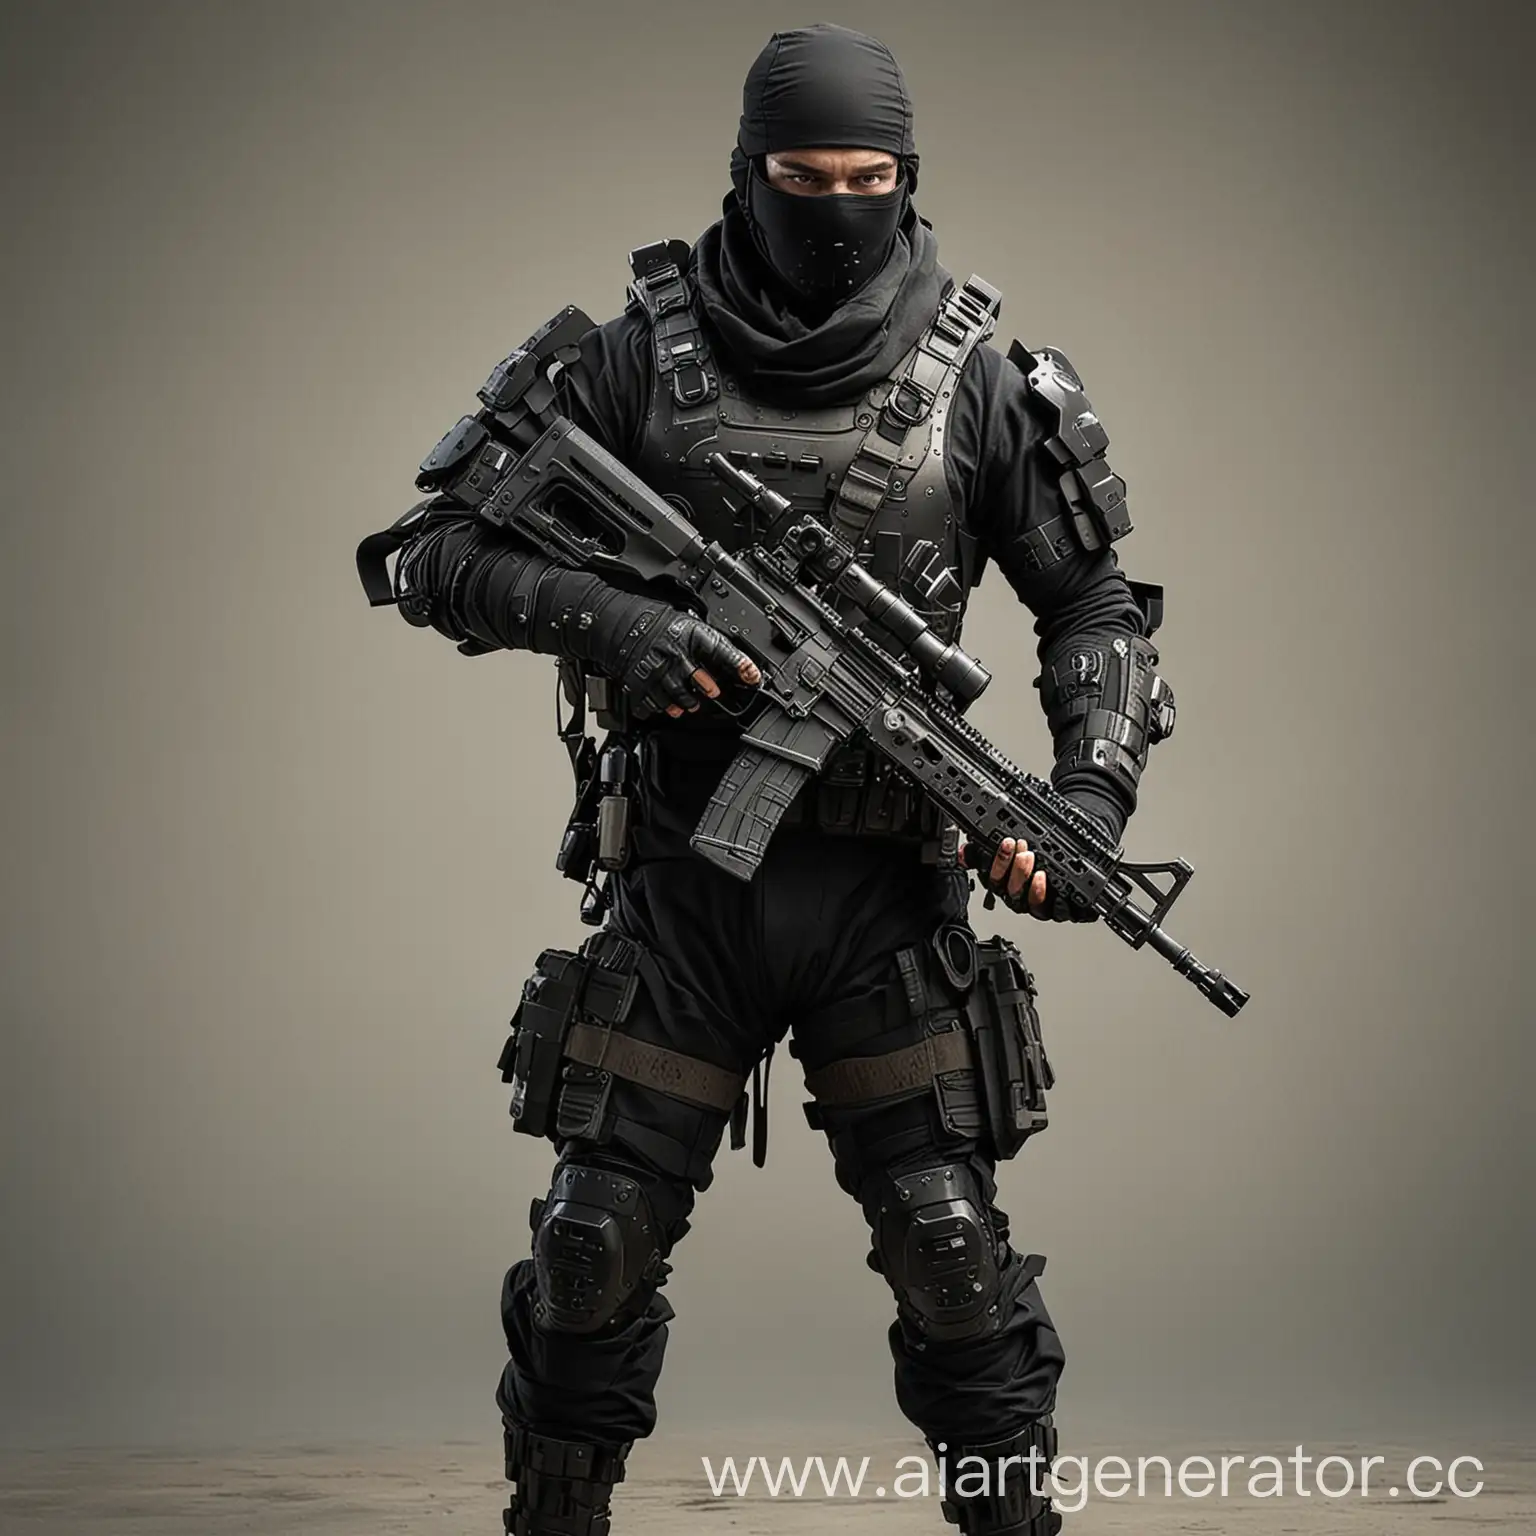 Futuristic-Special-Forces-Ninja-in-Full-Body-Armor-with-AK-Gun